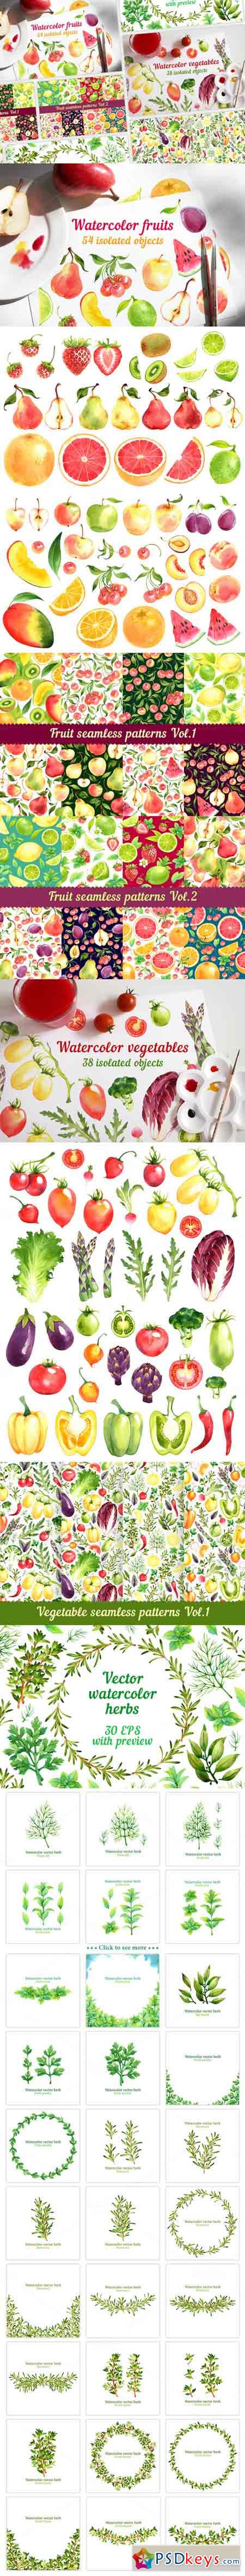 Fruits + Vegetables + Herbs 691203